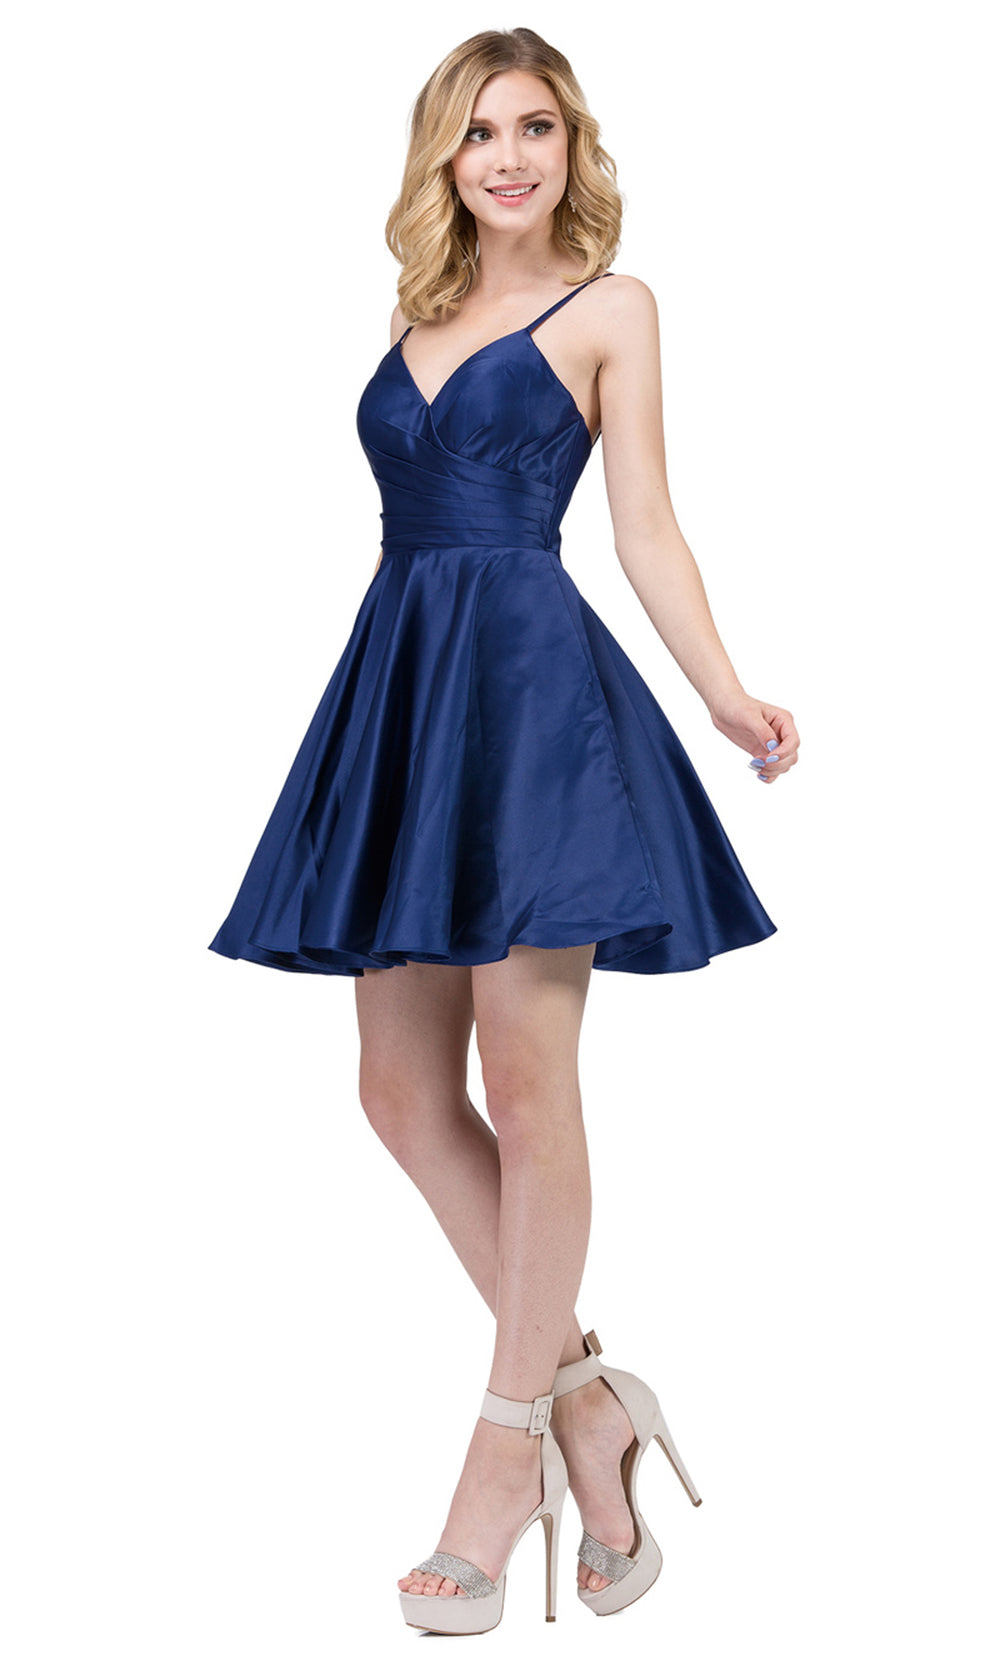 Sweet Jenny II Dress In Bluegrade 8 grad dresses, graduation dresses